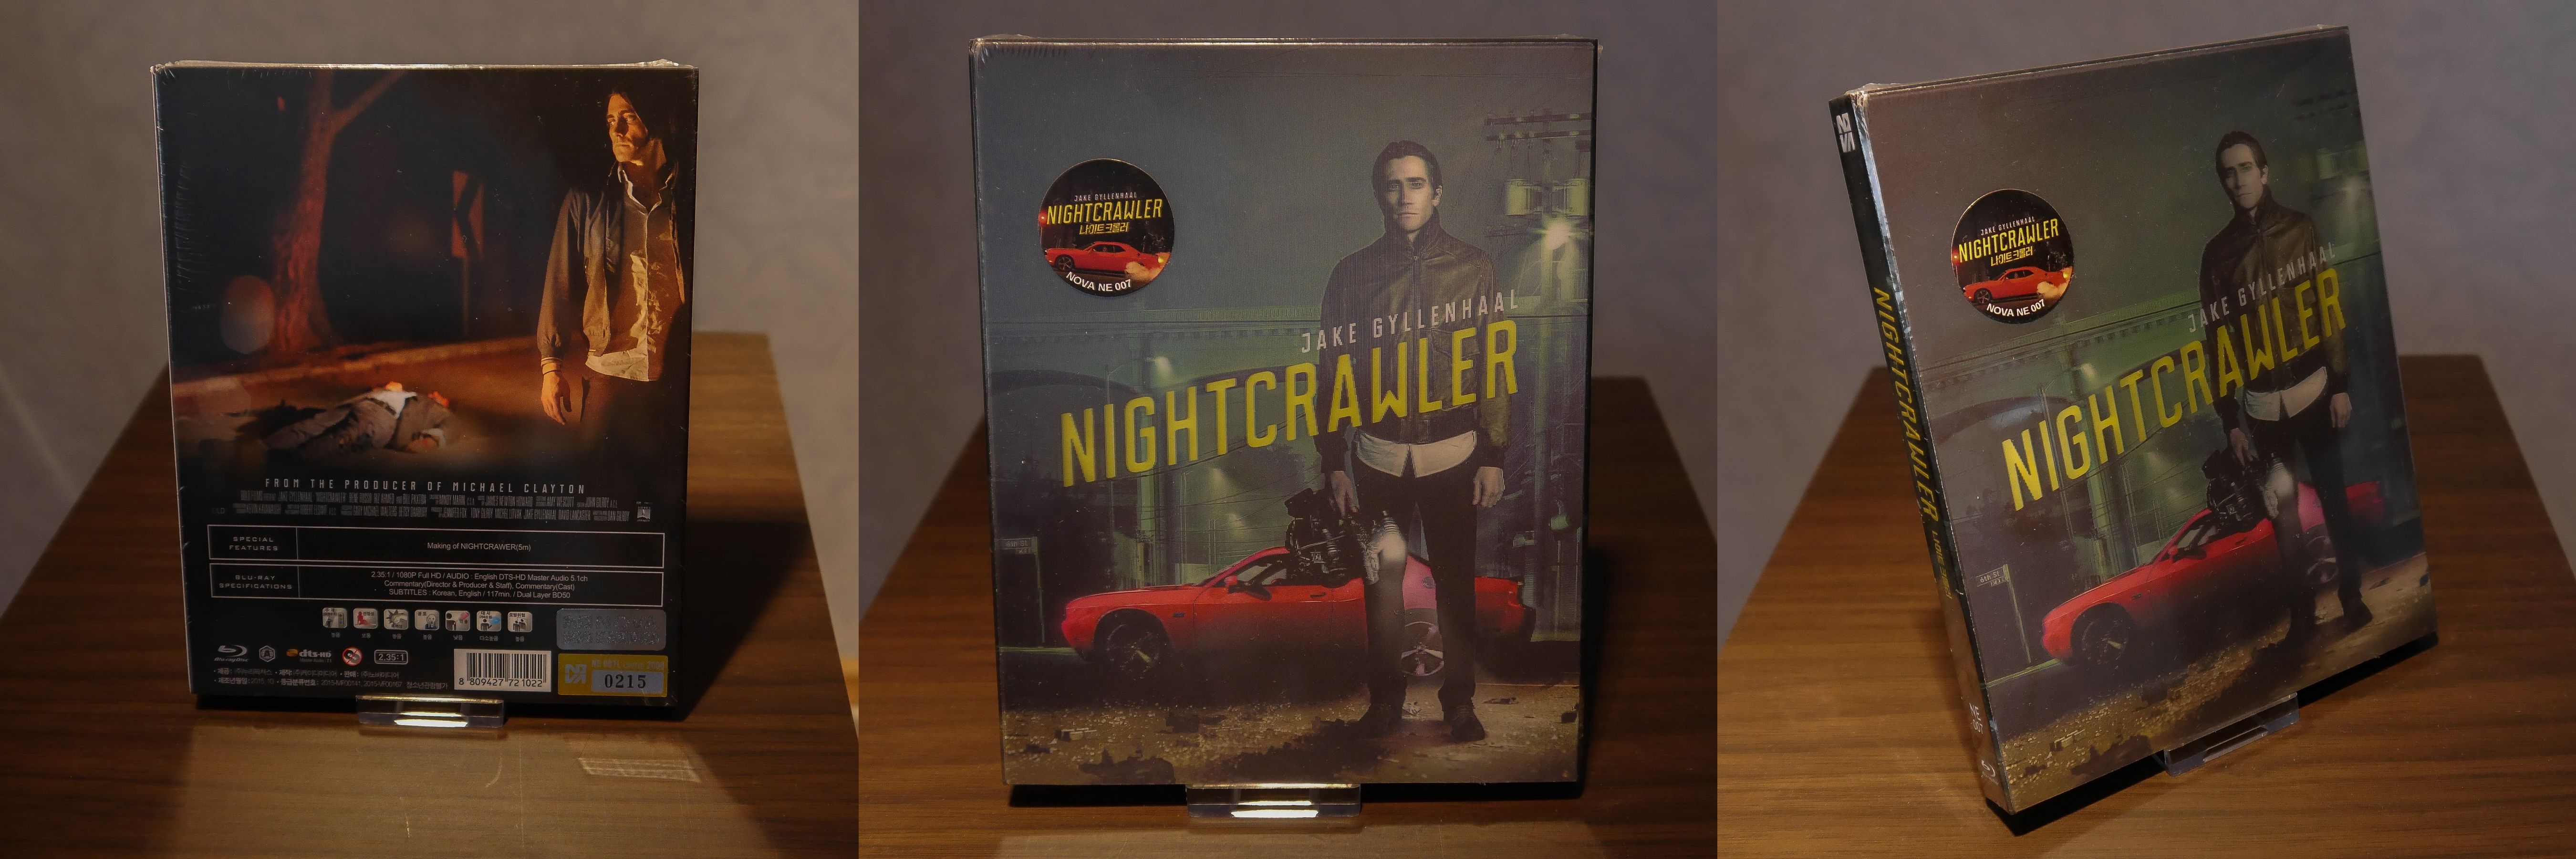 Nightcrawler Lenticular Edition Bluray Steelbook Novamedia Korea